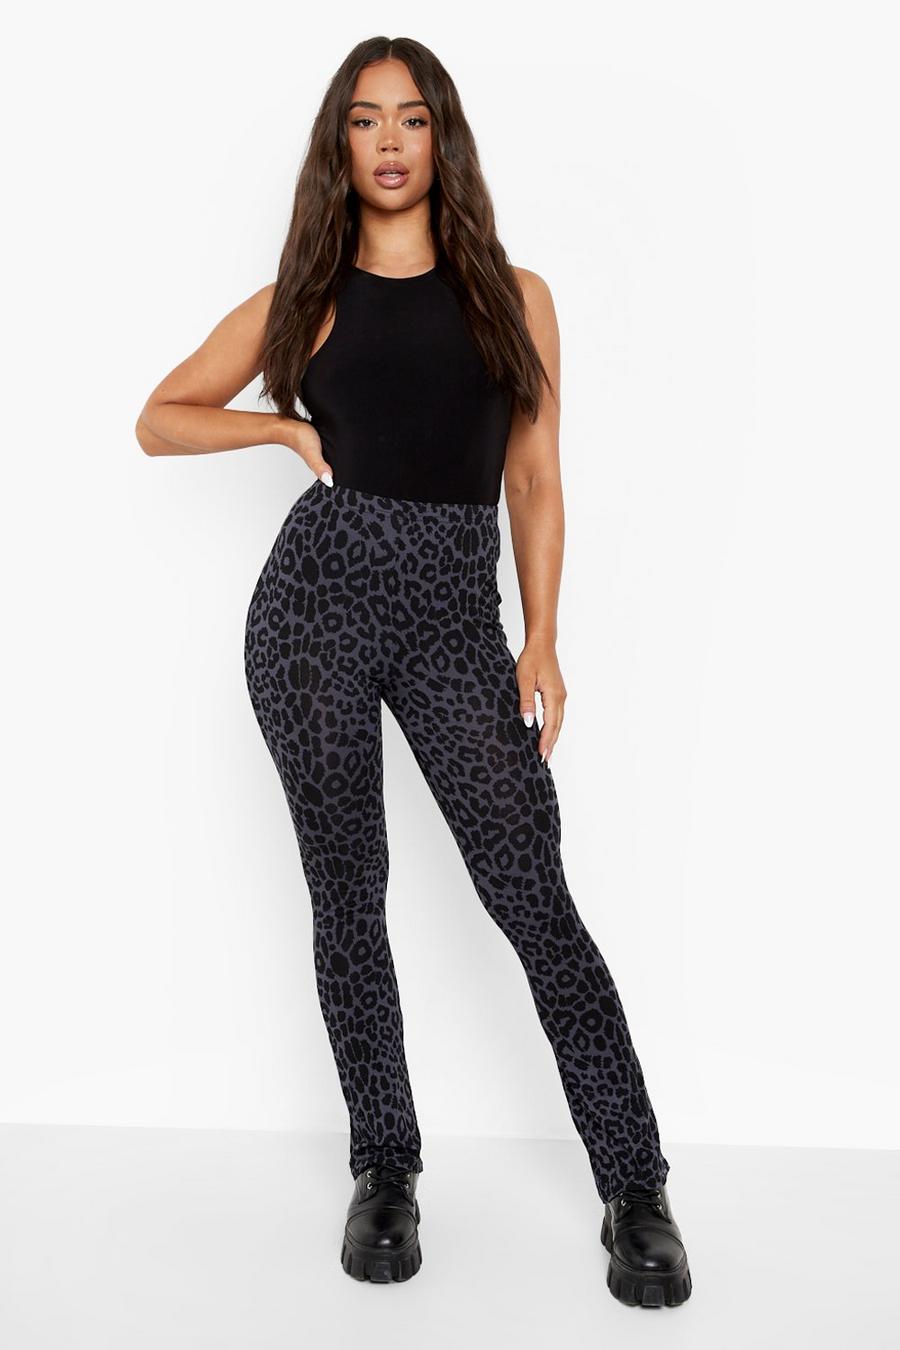 https://media.boohoo.com/i/boohoo/fzz39462_black_xl/female-black-leopard-print-flared-leggings/?w=900&qlt=default&fmt.jp2.qlt=70&fmt=auto&sm=fit